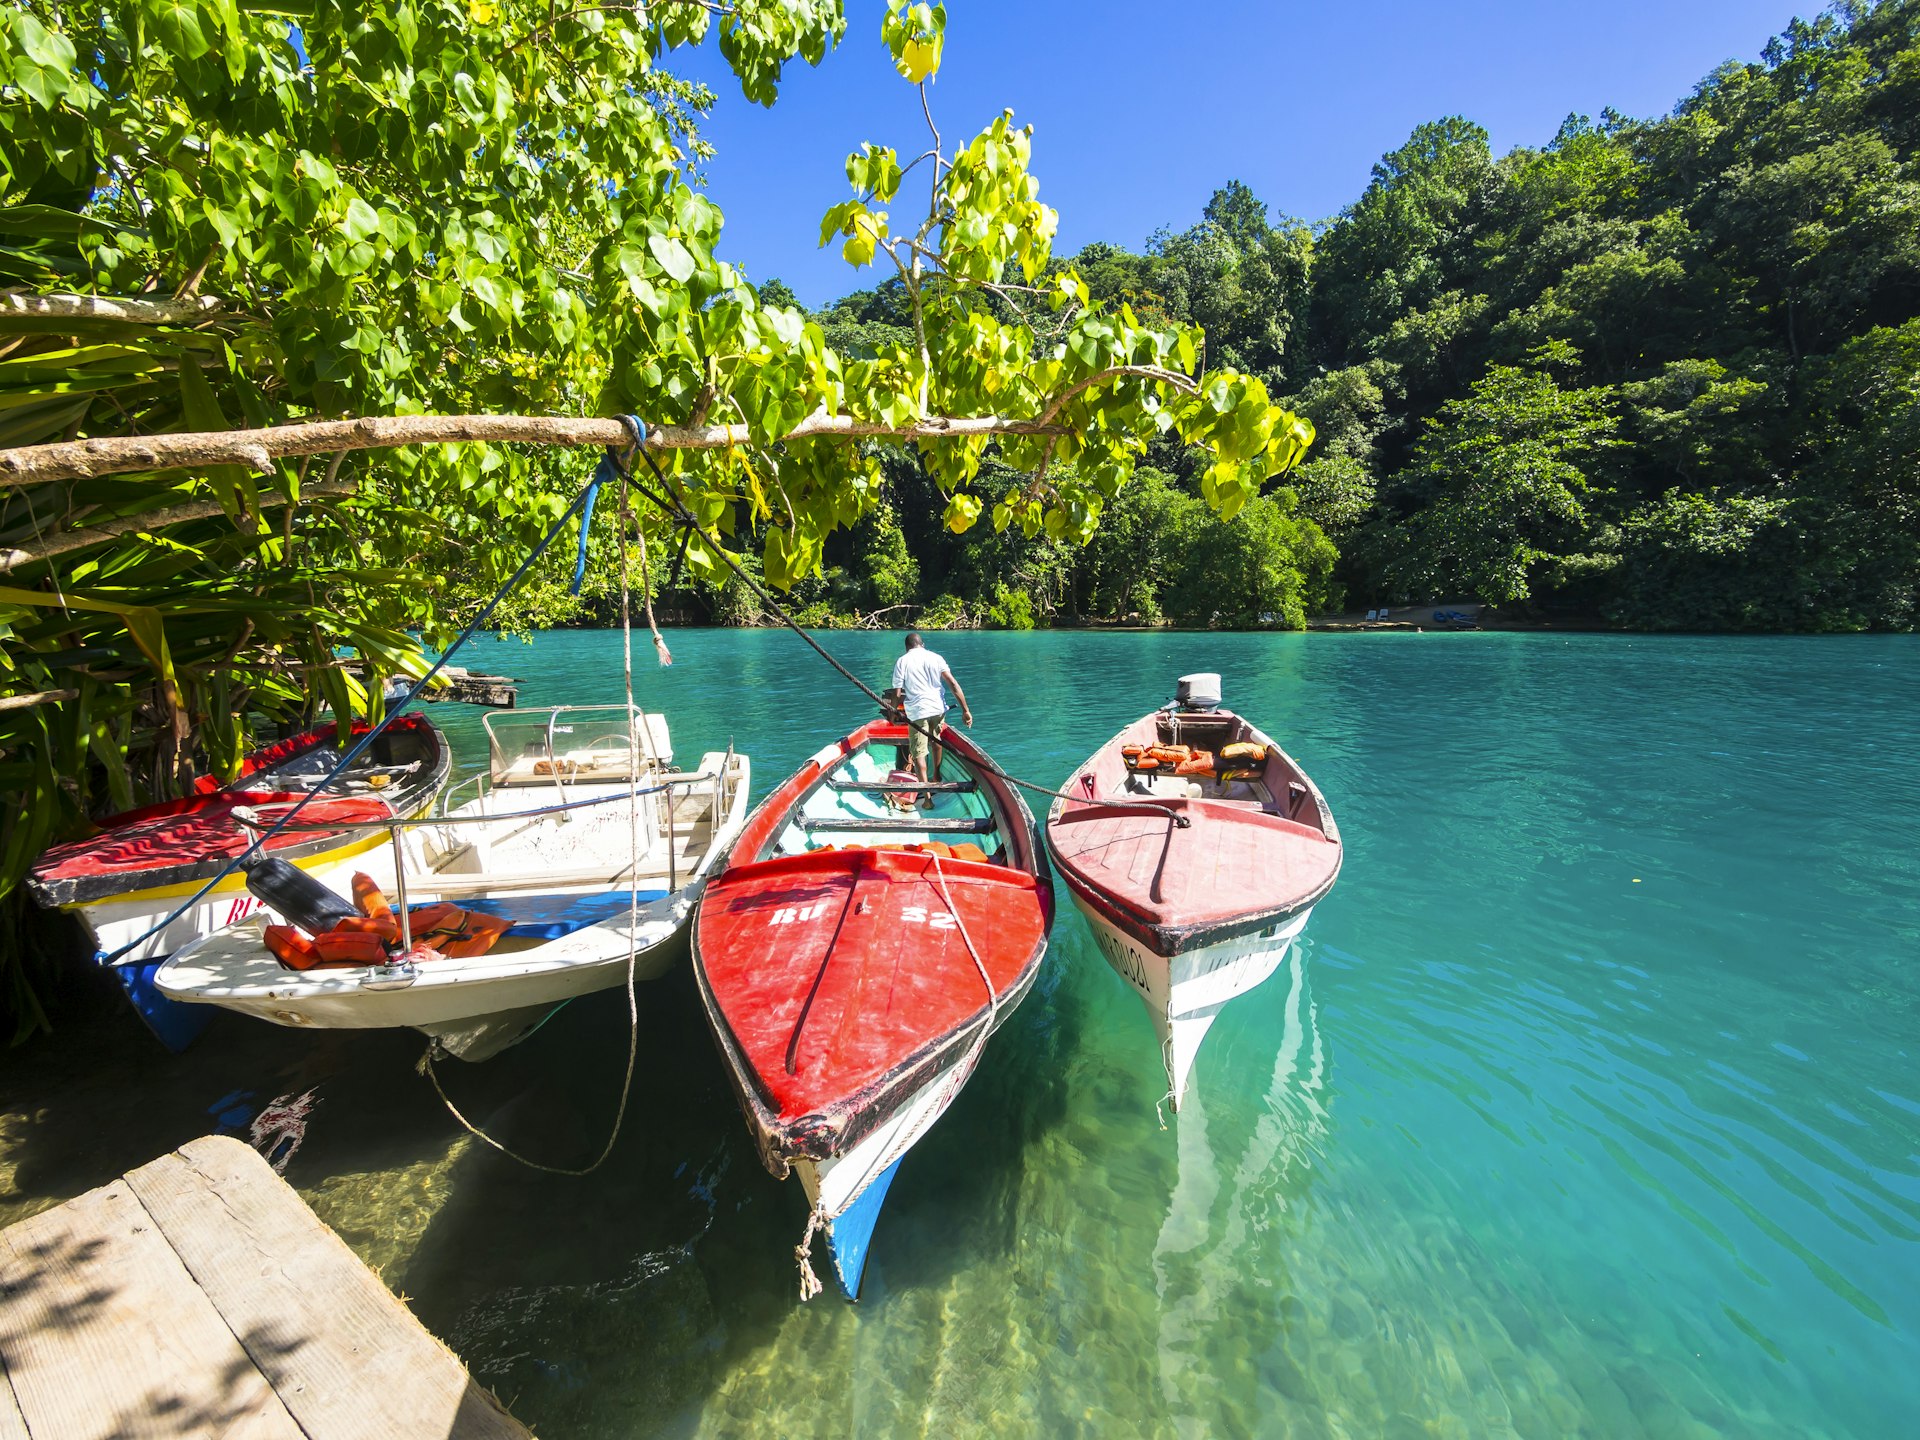 Three multi-coloured boats tied against a tree in Jamaica's Port Antonio bob in a blue lagoon